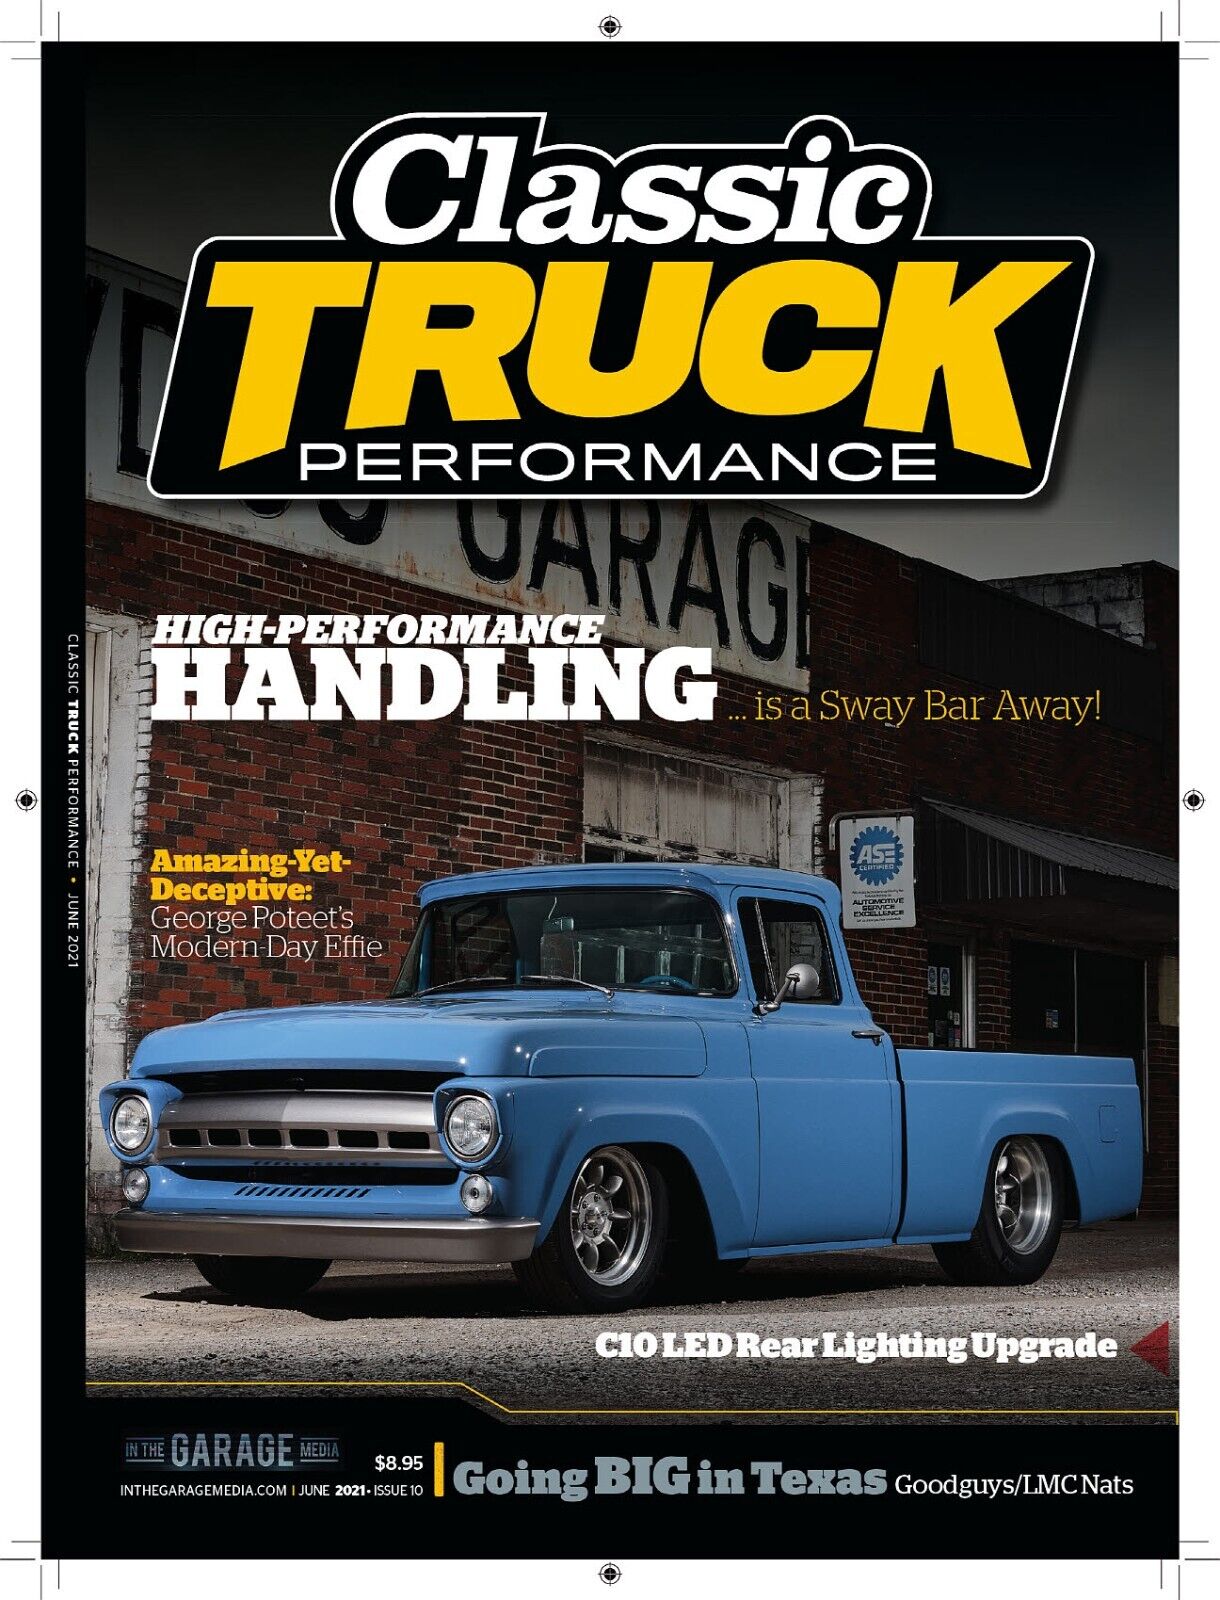 Classic Truck Performance Magazine Issue #10 June 2021 - New